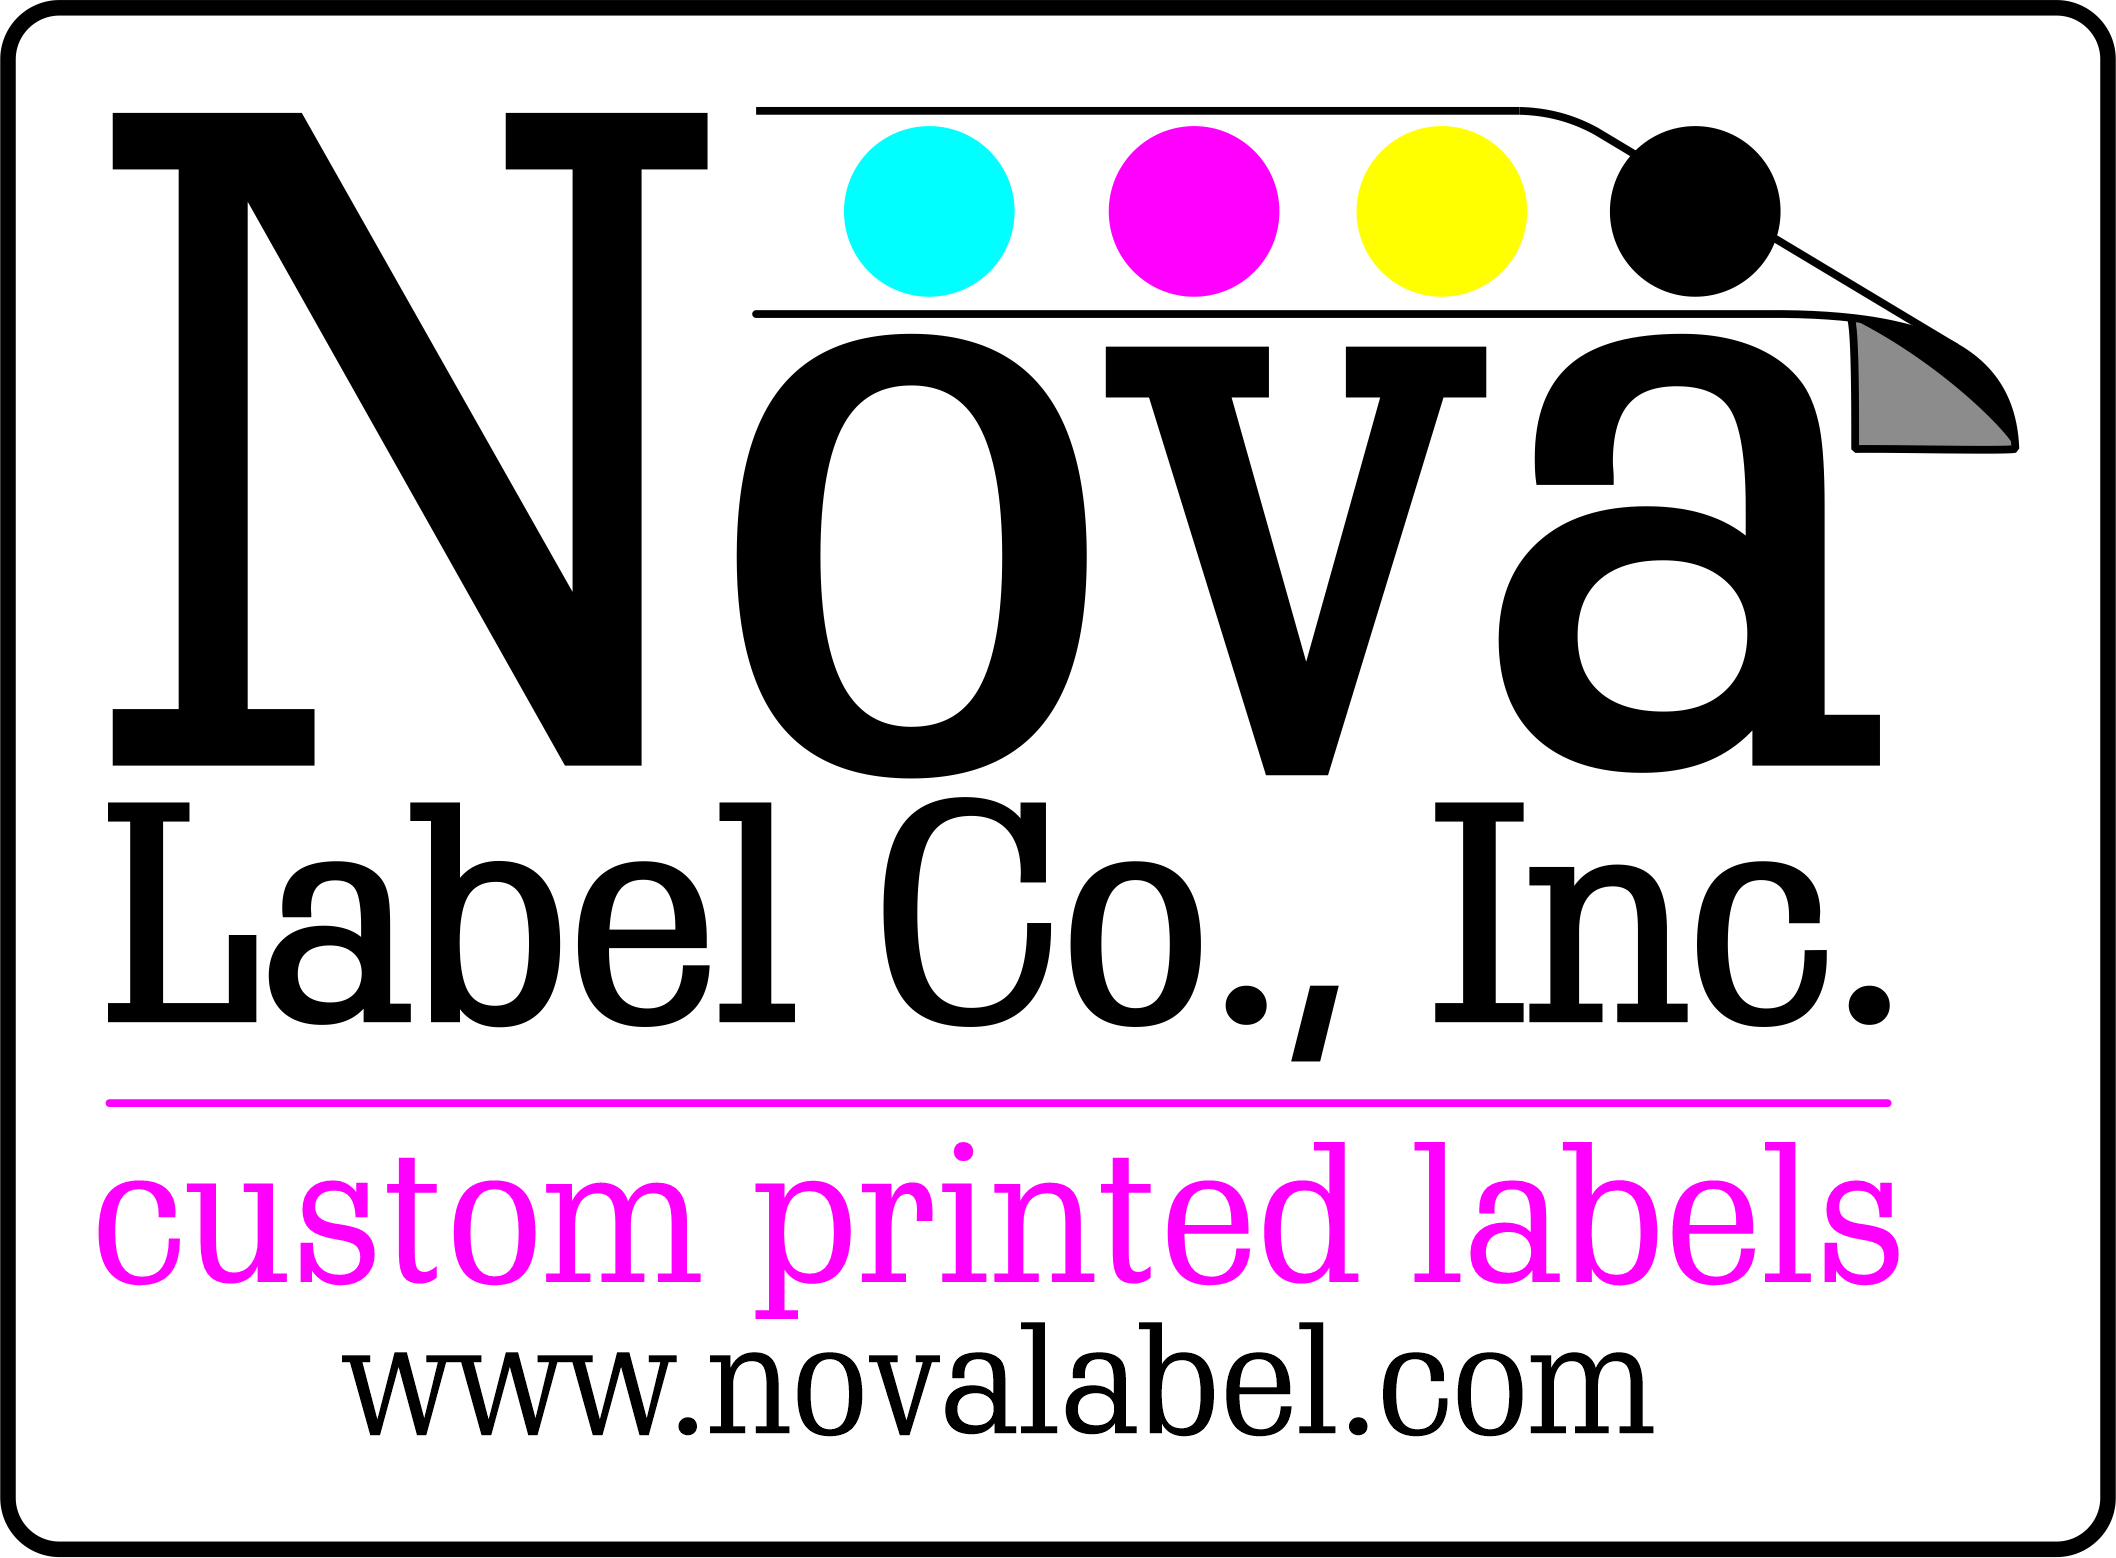 Updated Logo for Nova Label Co., Inc.